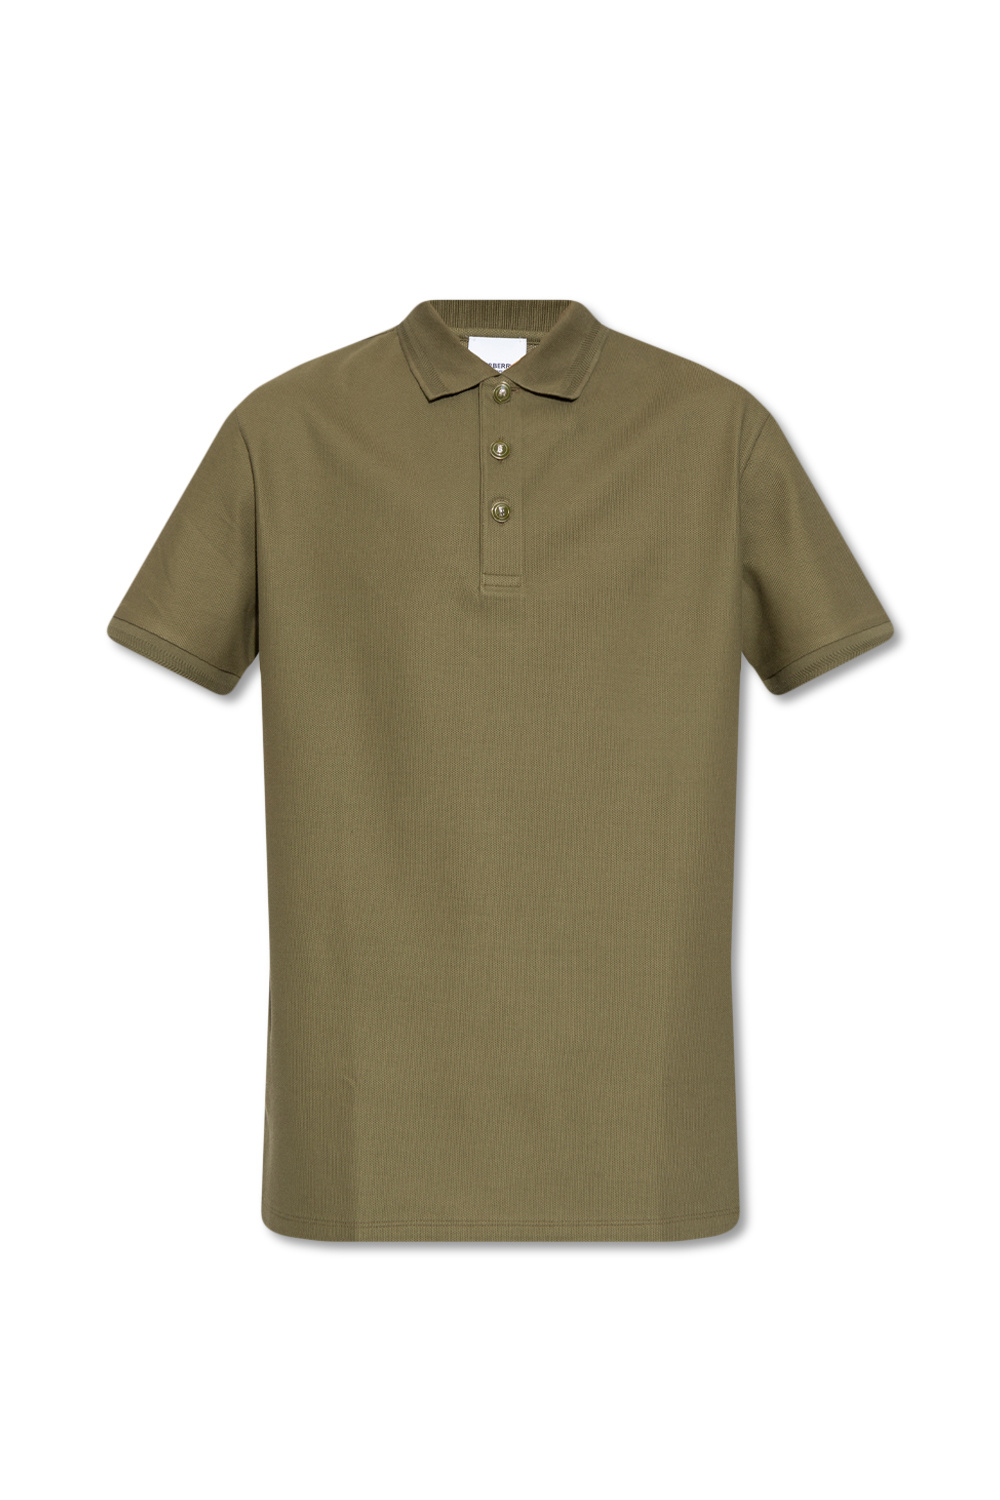 Burberry ‘Goldman’ polo shirt